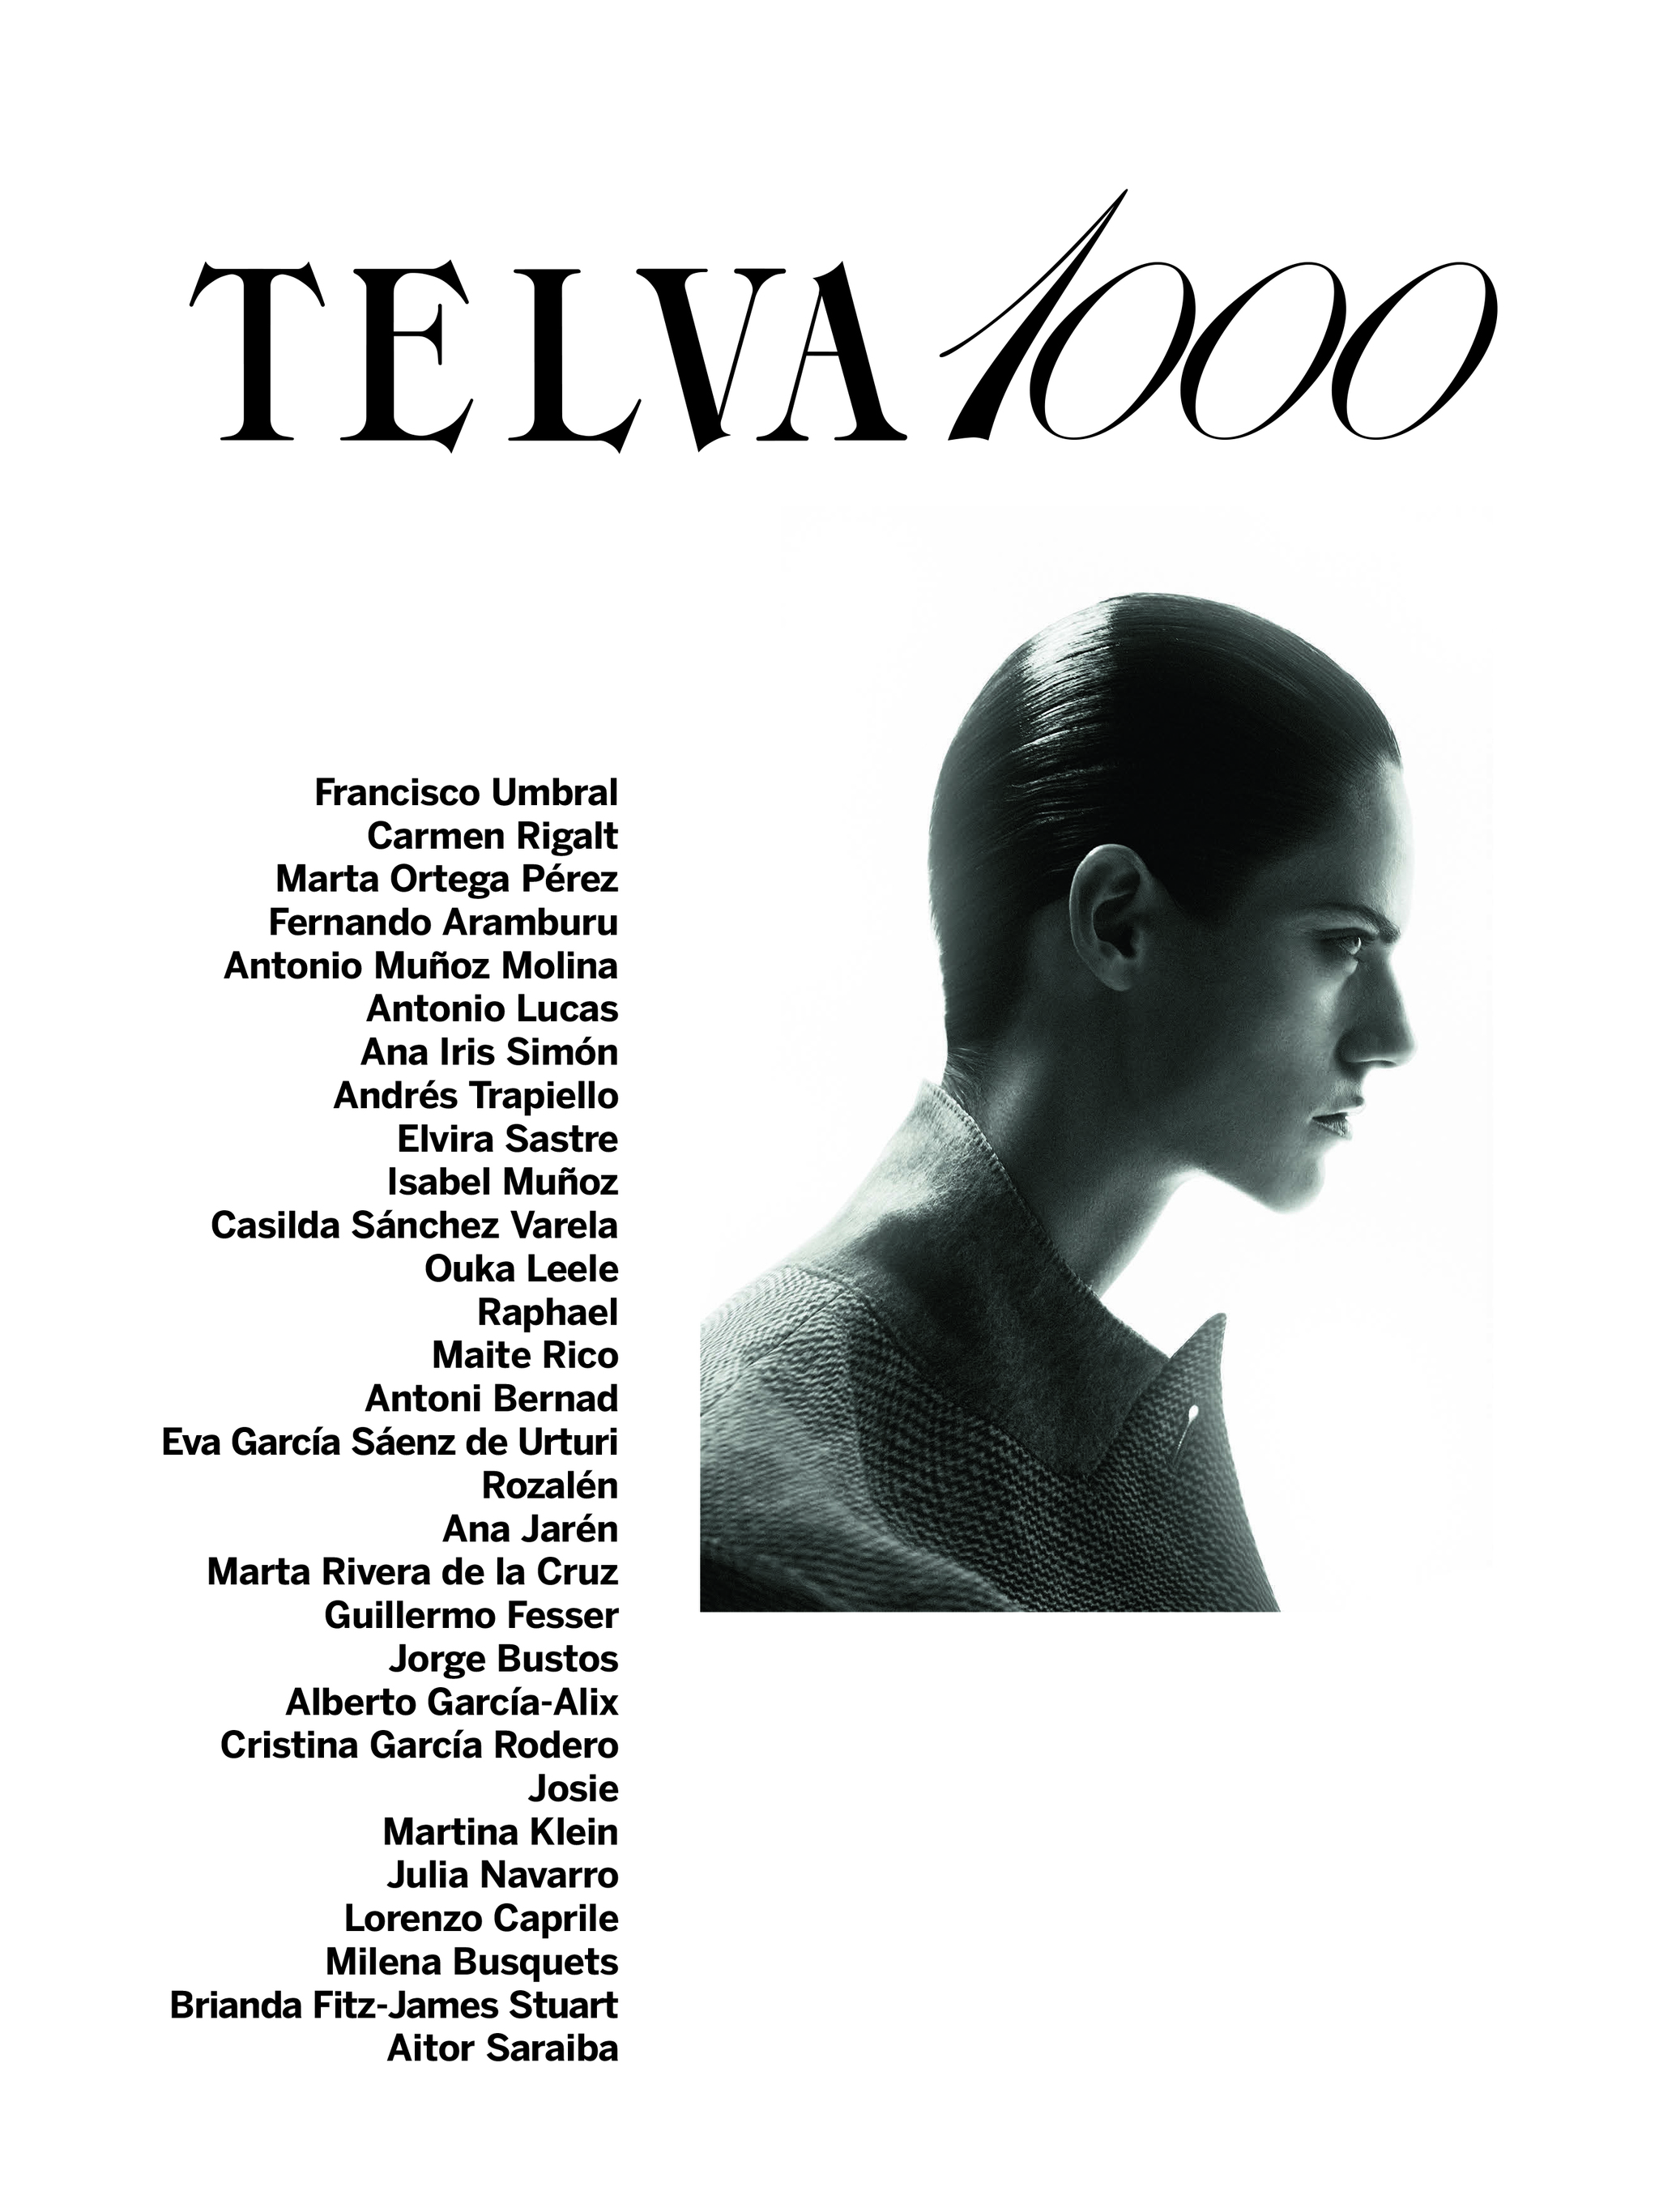 30 firmas reunidas en un cuaderno inspirador para celebrar TELVA1000.